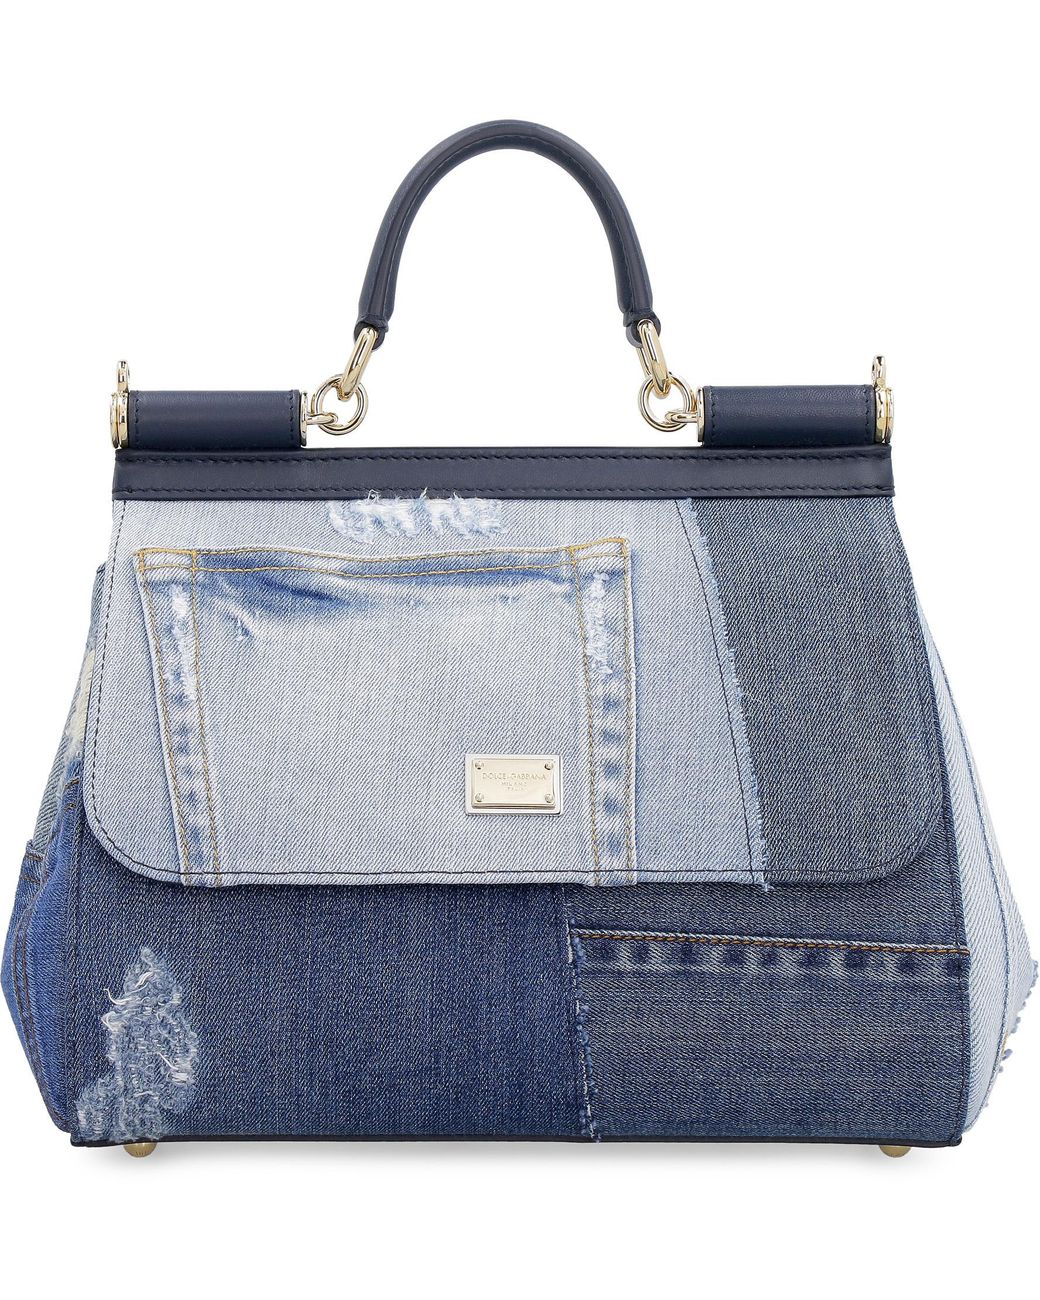 Dolce & Gabbana Sicily Denim Handbag in Blue - Lyst